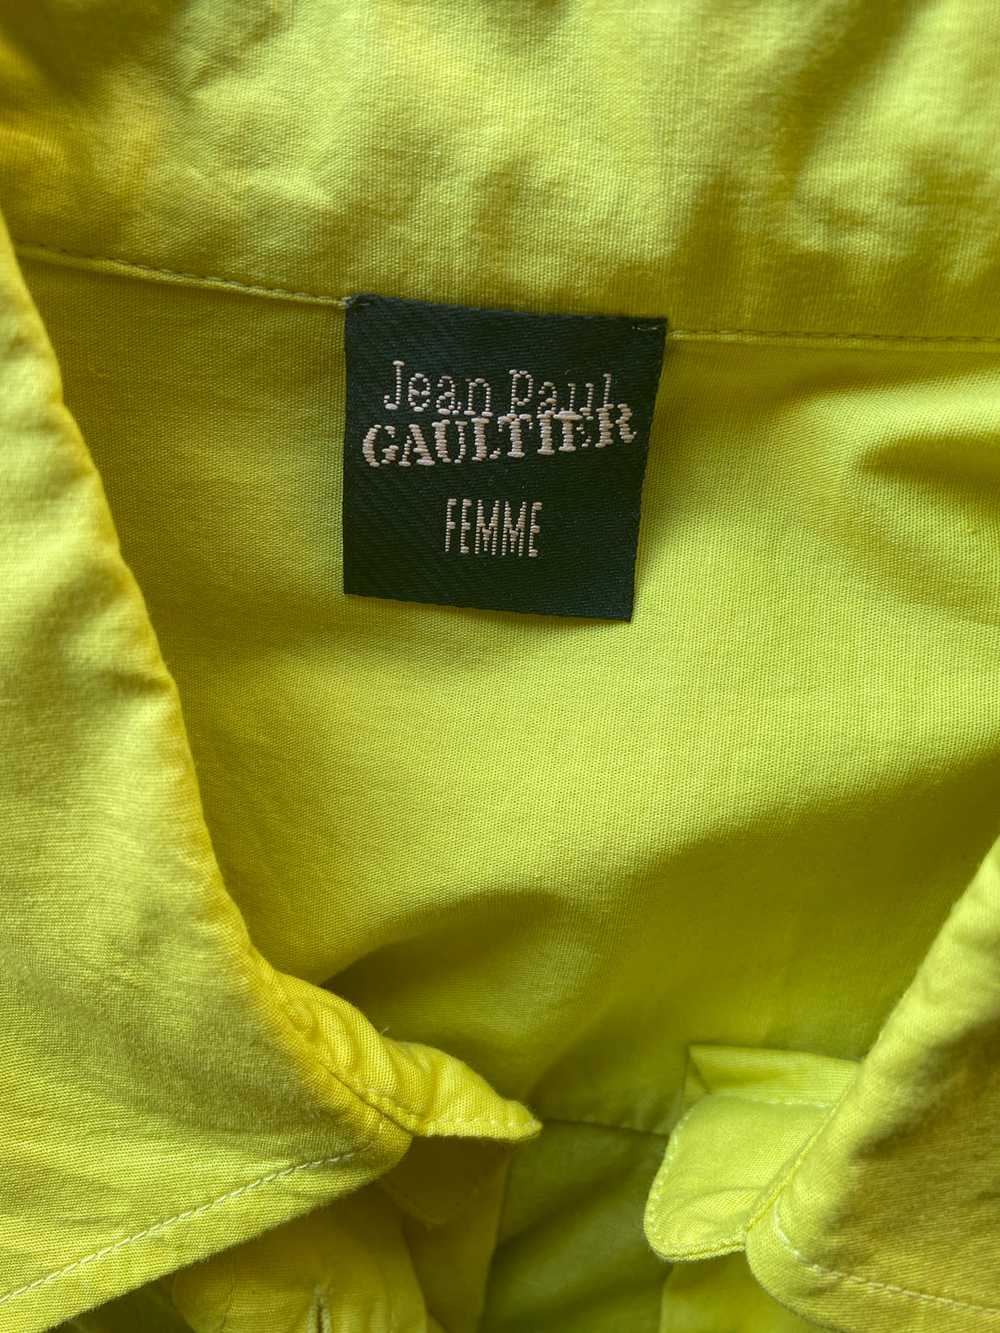 Jean Paul Gaultier corset shirt - image 6